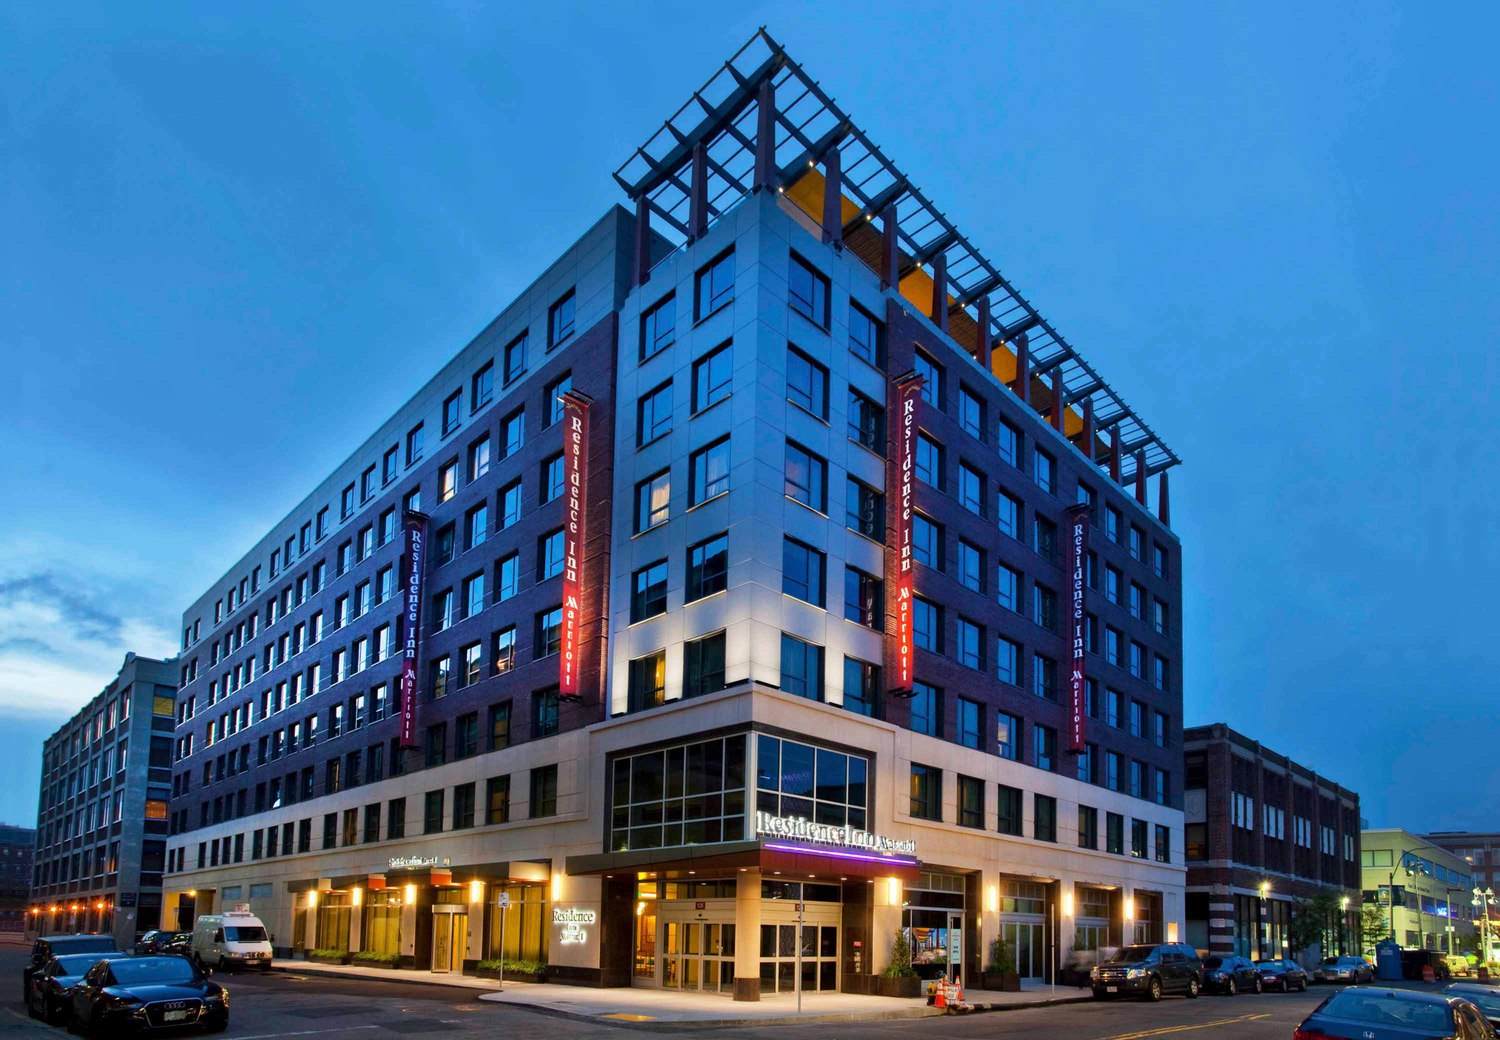 Residence Inn Boston Back Bay/Fenway, Boston, MA Jobs Hospitality Online